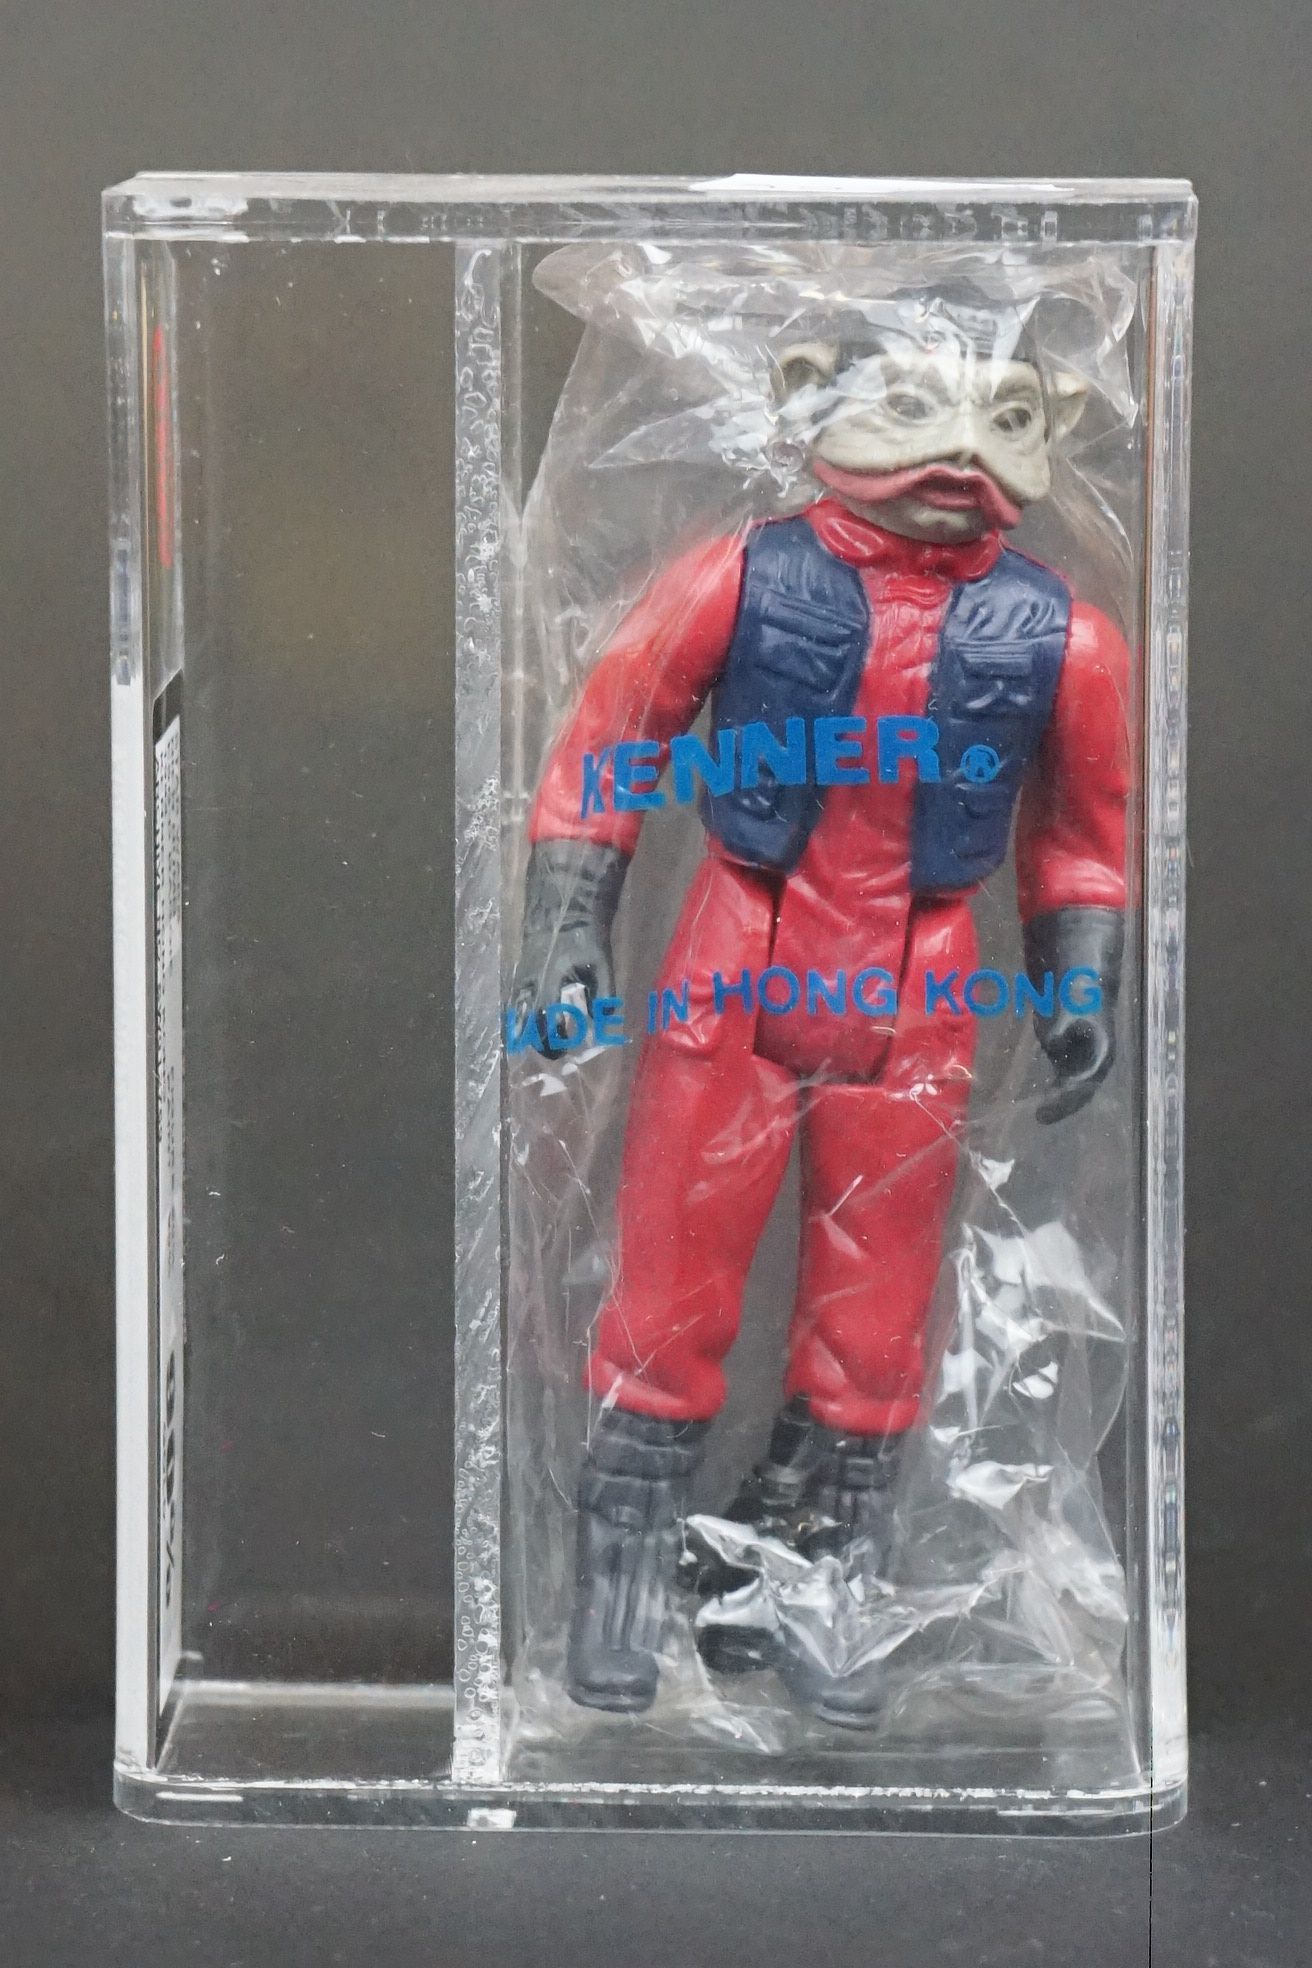 Star Wars - UKG graded cased Nien Numb figure in original Kenner baggy (1984), Figure 90% Paint - Image 2 of 3